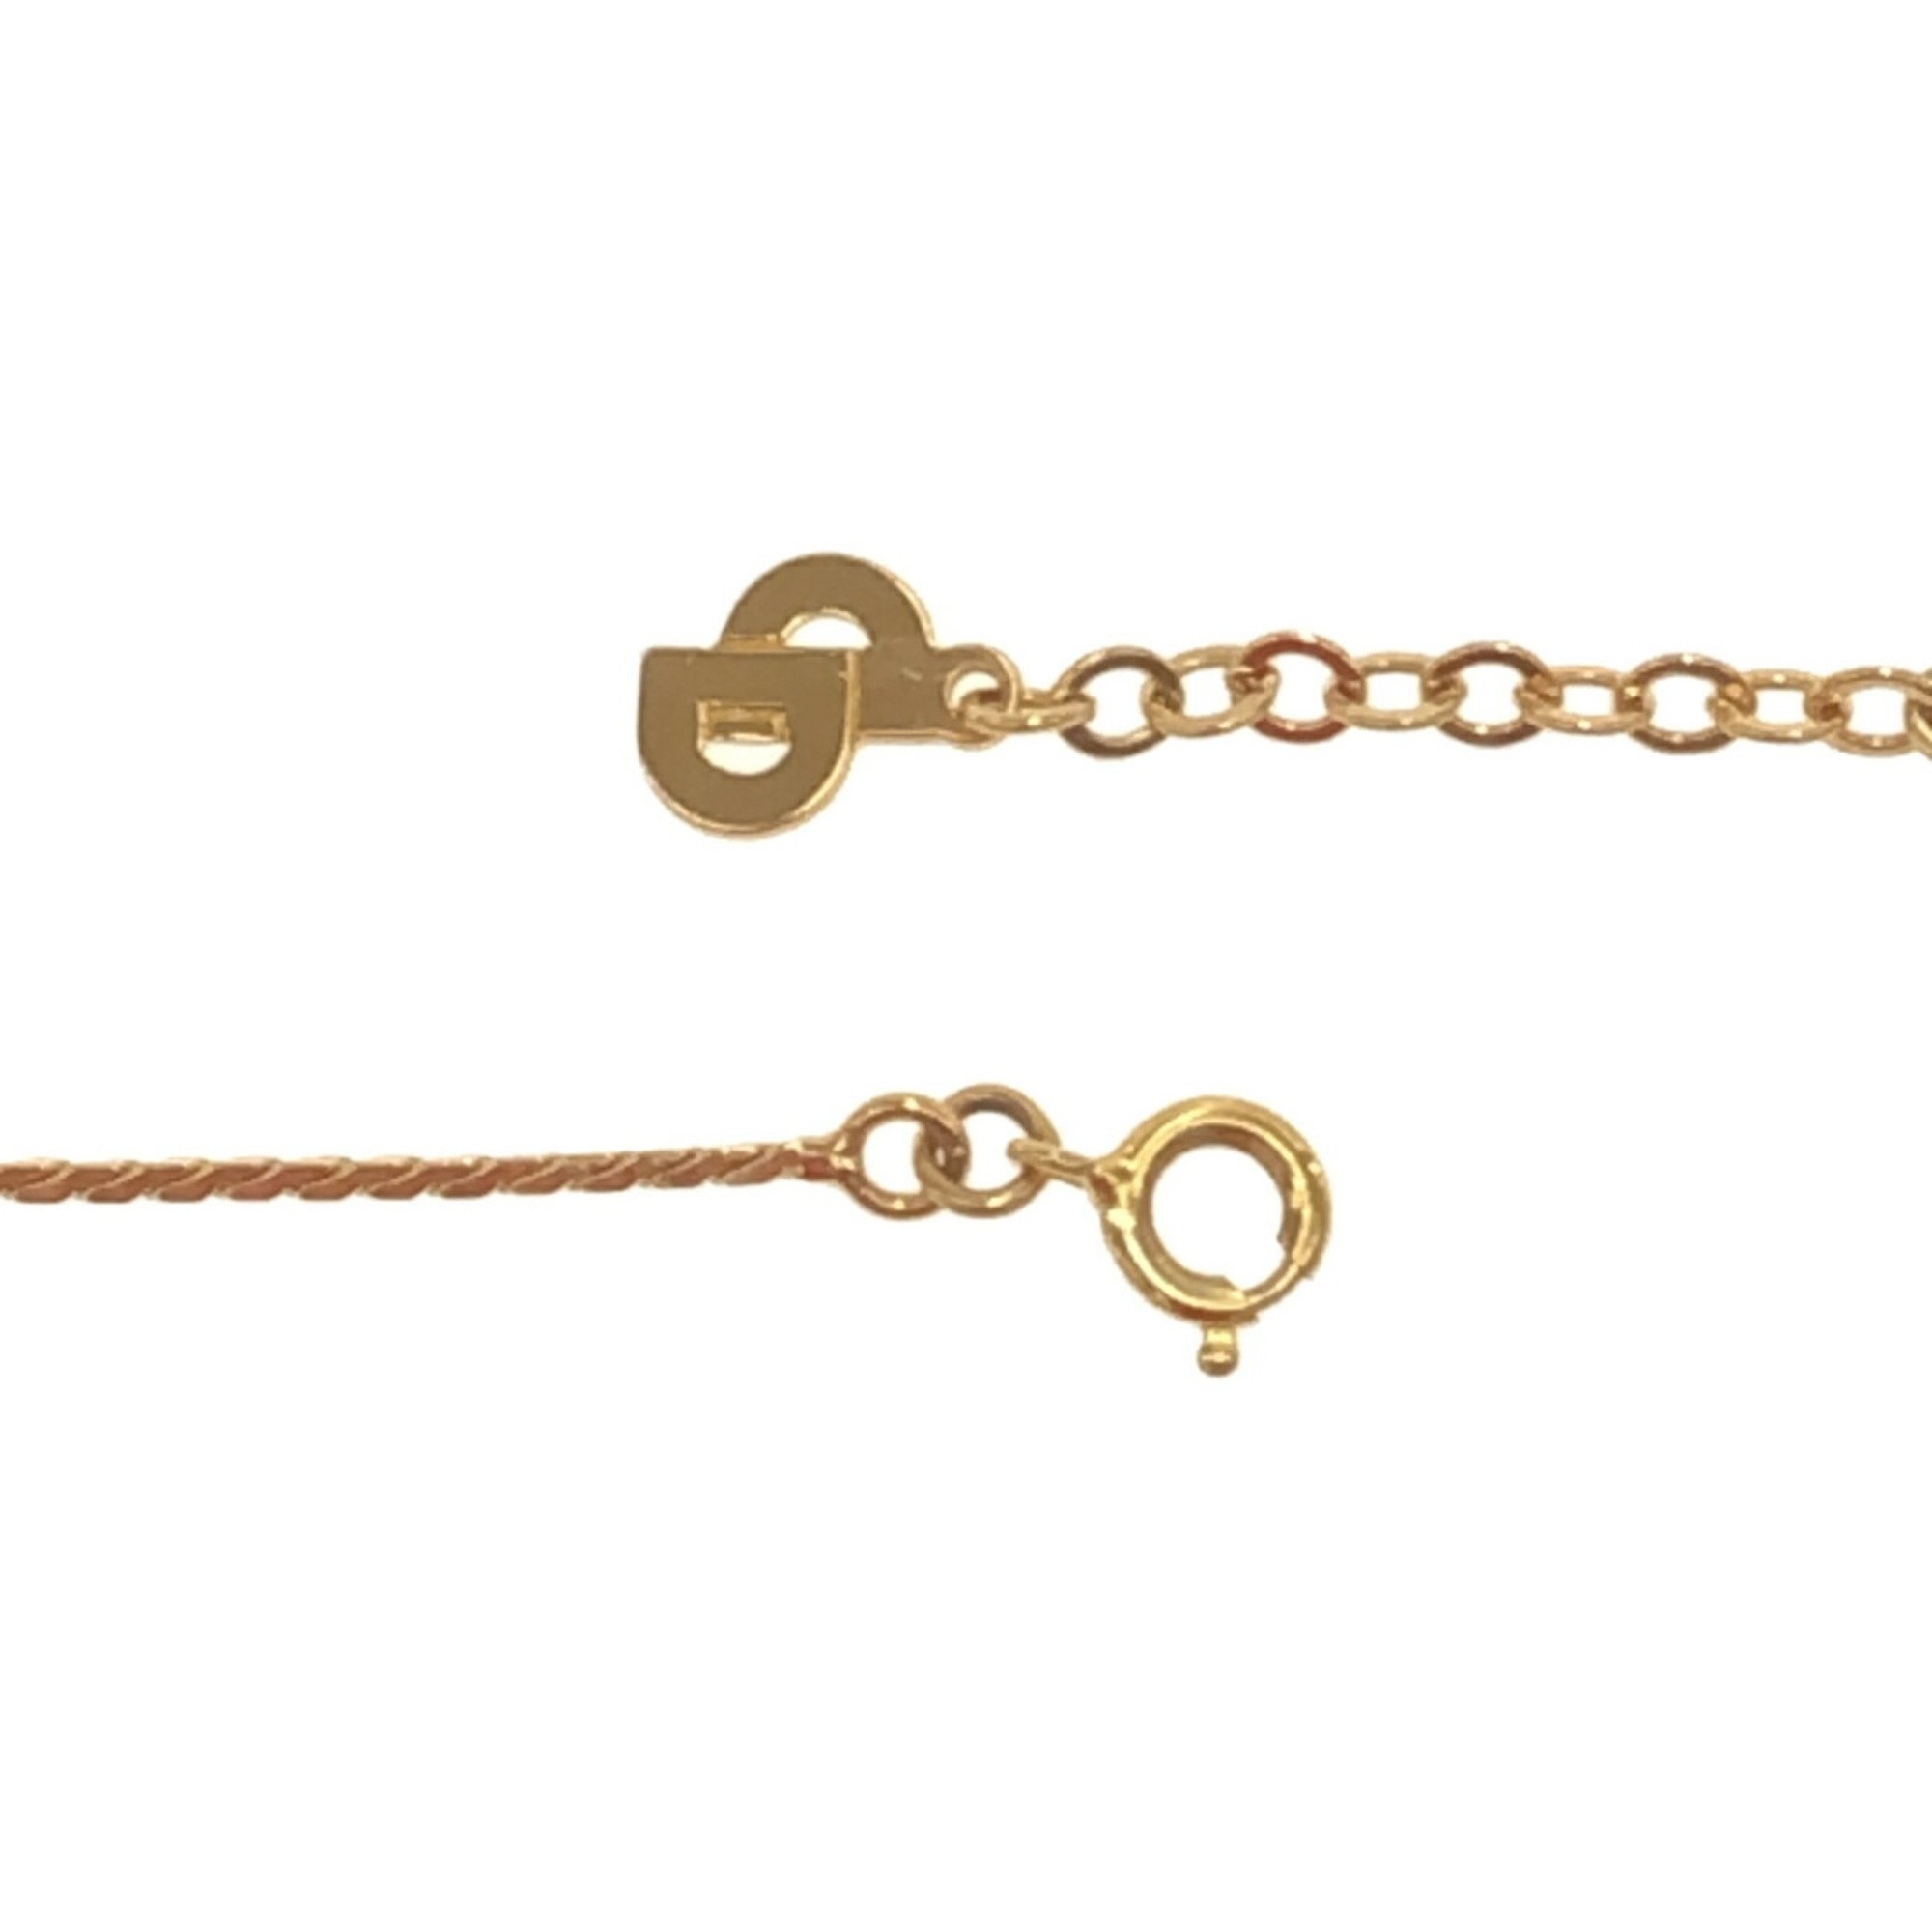 Christian Dior CD Necklace Gold Stone Ladies vintage IT4SJZ4L0G5O RM1039R